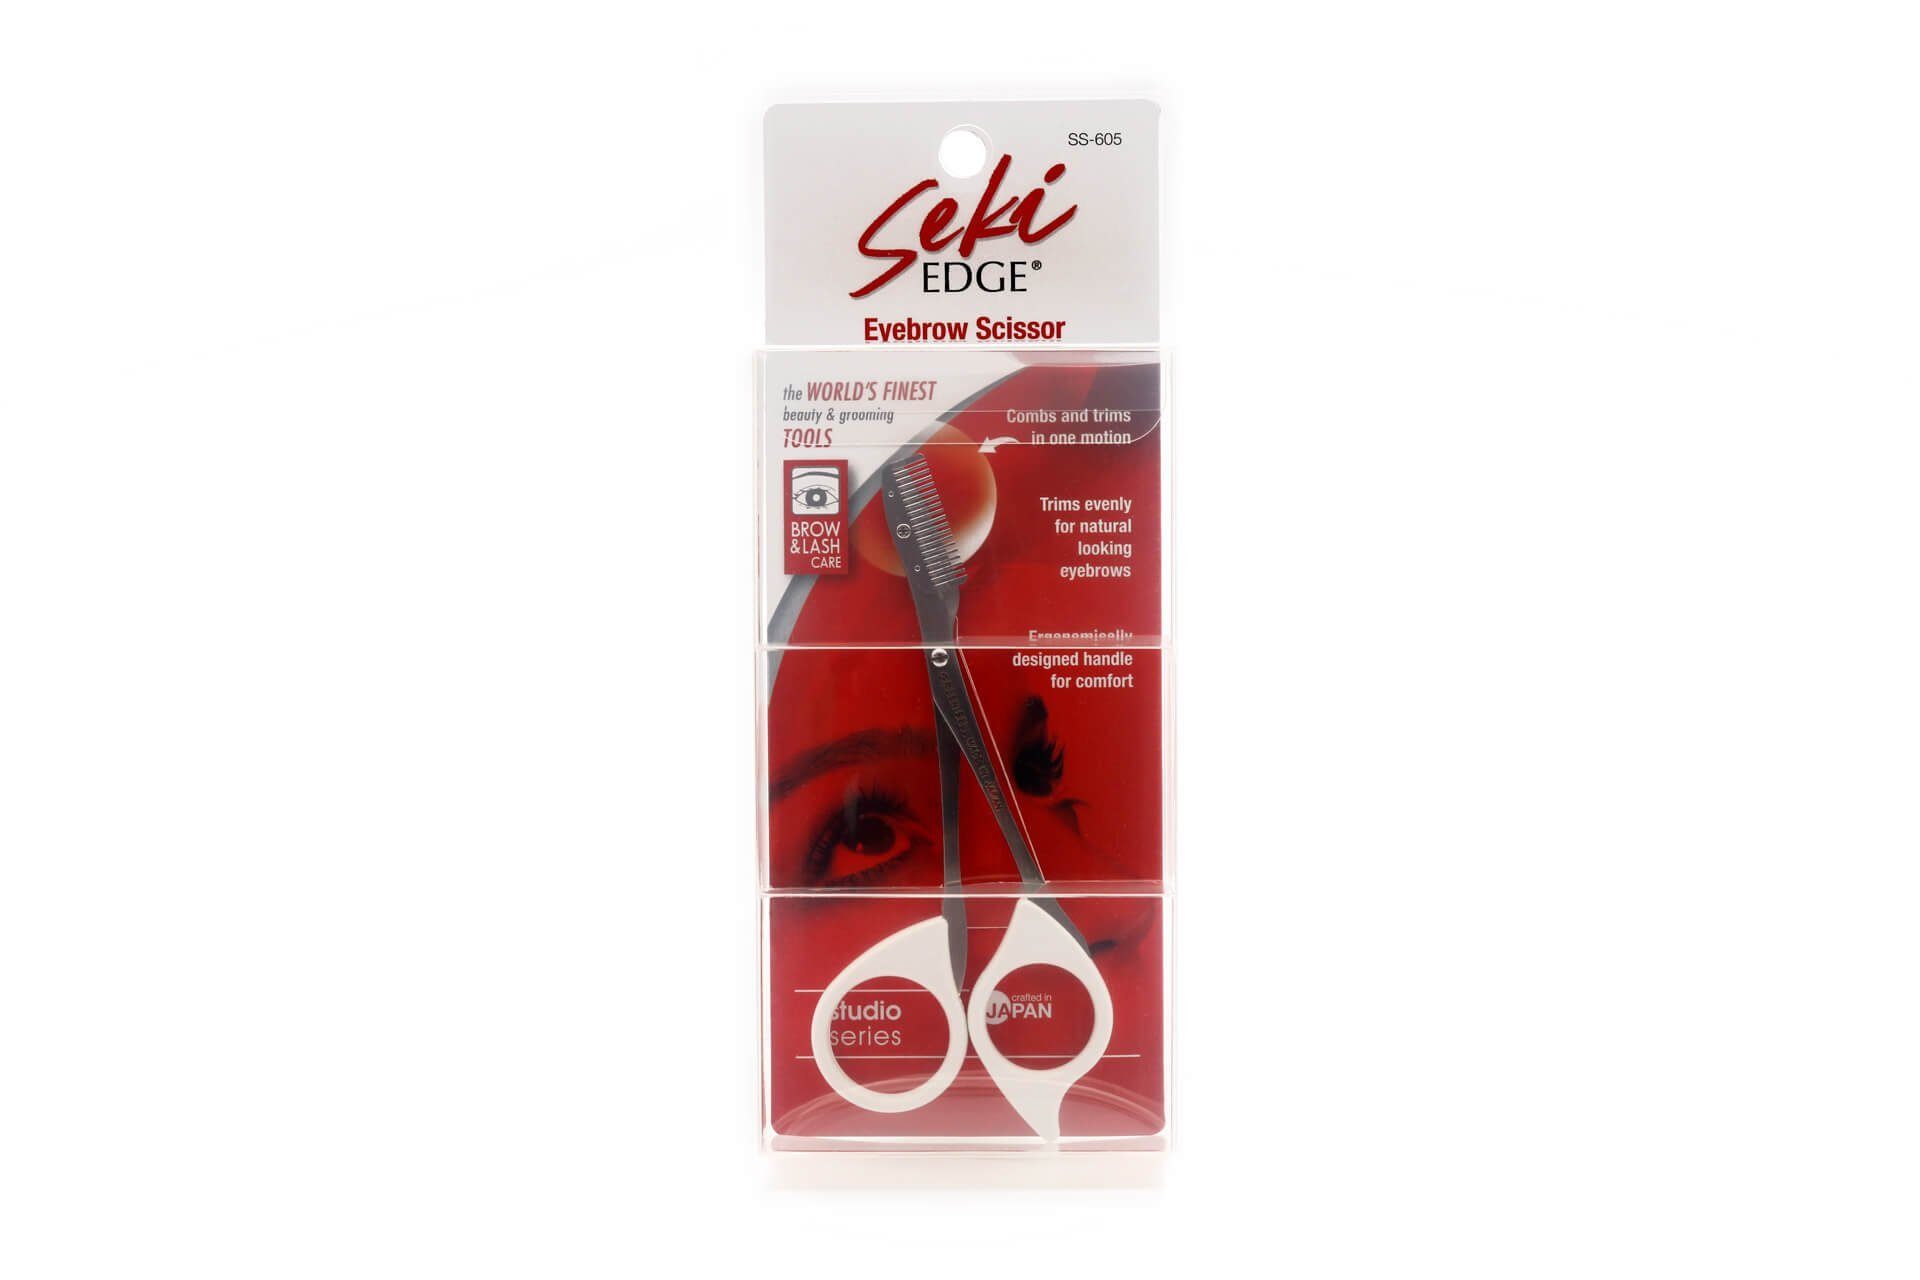 Seki EDGE Augenbrauenschere Qualitätsprodukt mit 5.3x12x0.6 SS-605 aus cm, handgeschärftes Augenbrauen-Trimmer Japan Kamm